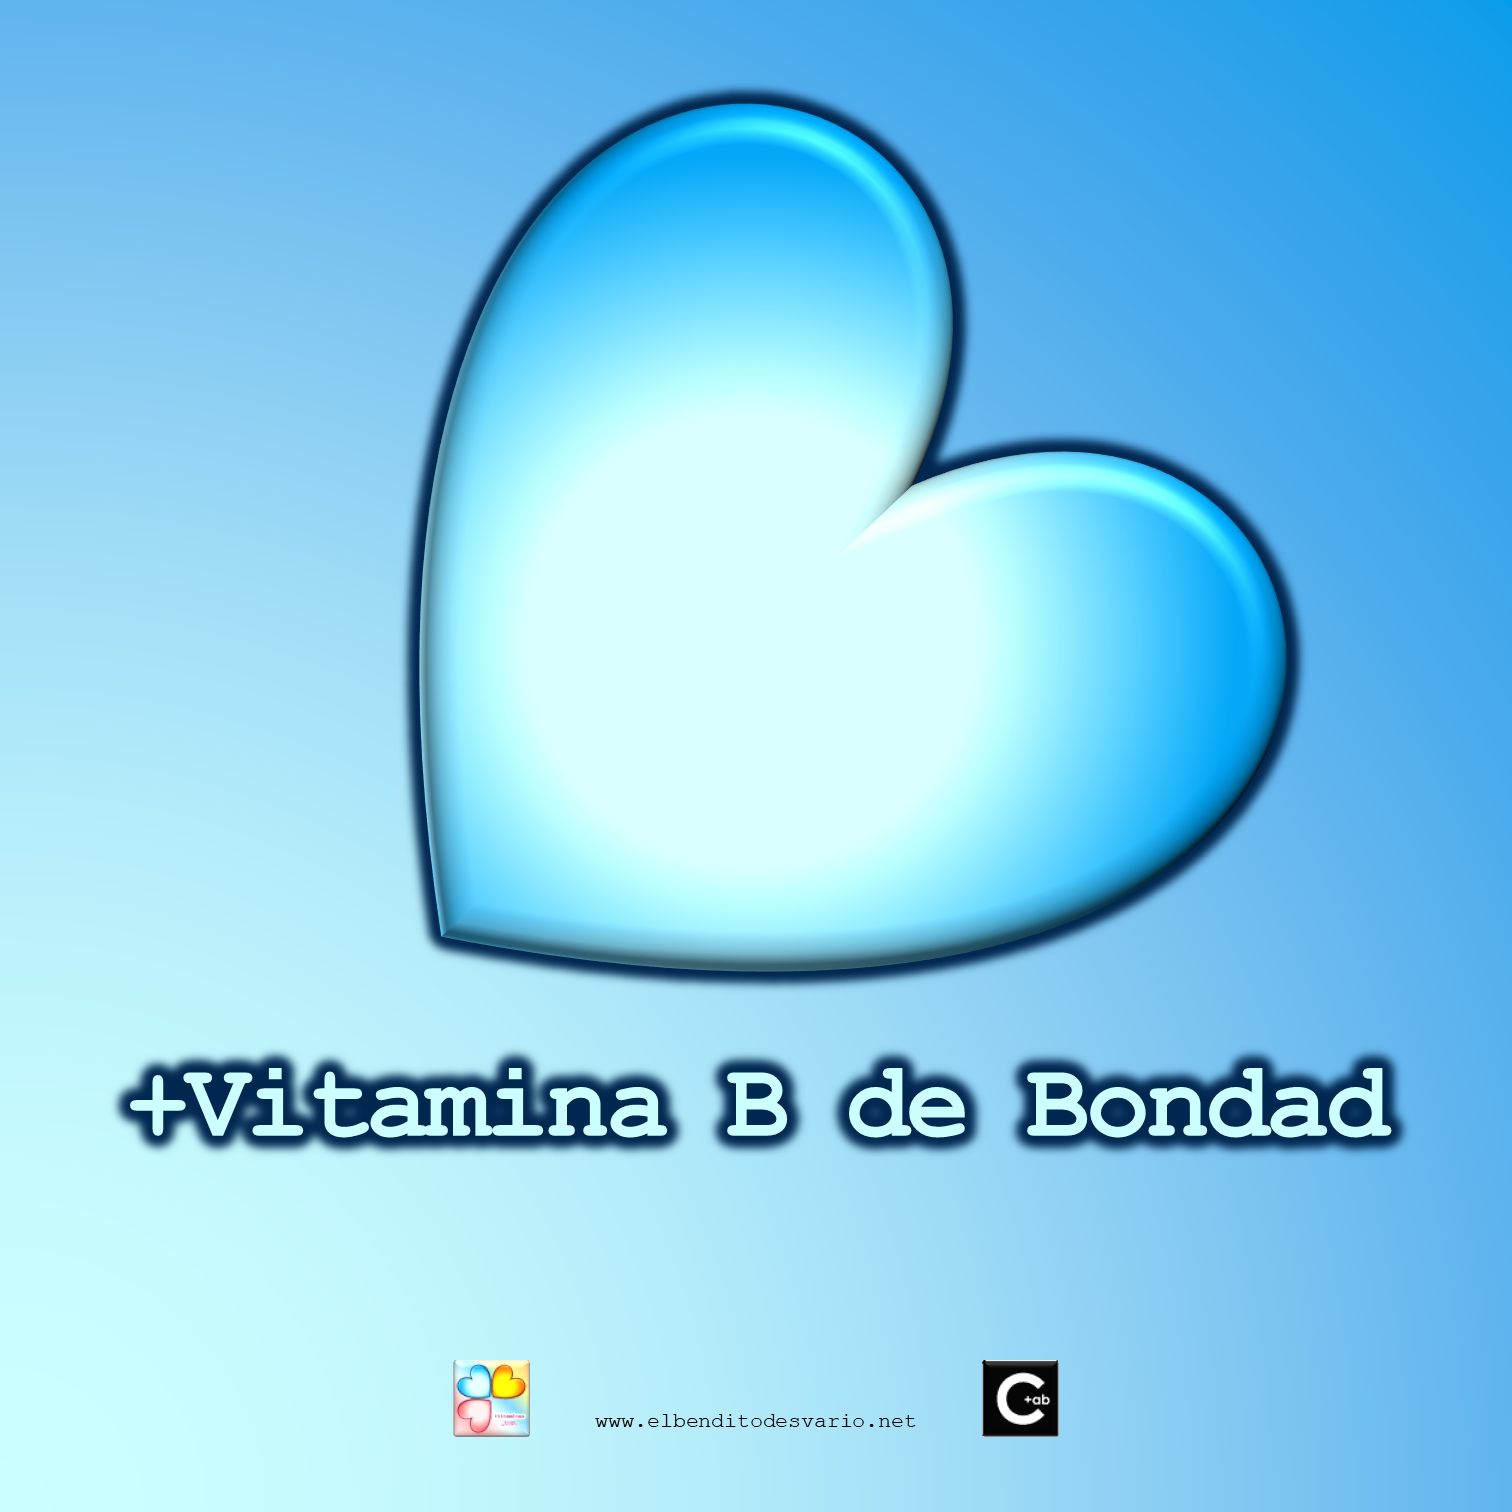 +Vitamina B de Bondad